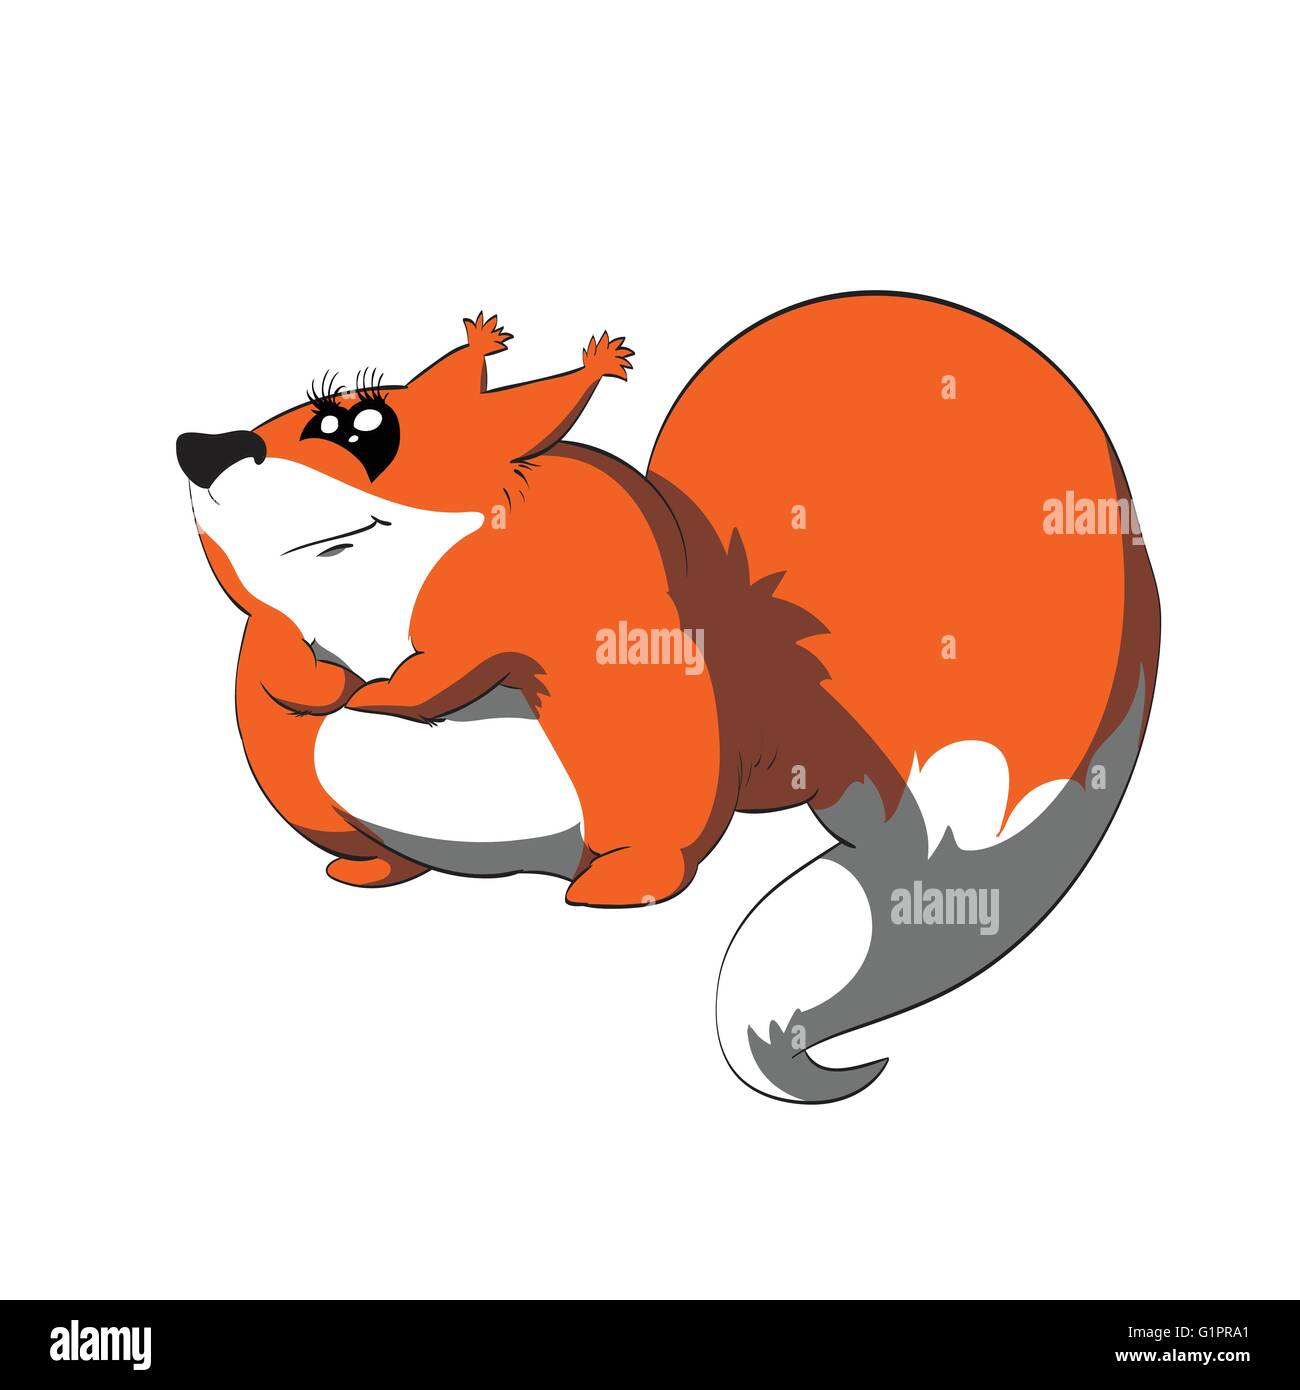 Vector cartoon illustration of a fat, fluffy, orange squirrel Stock Vector